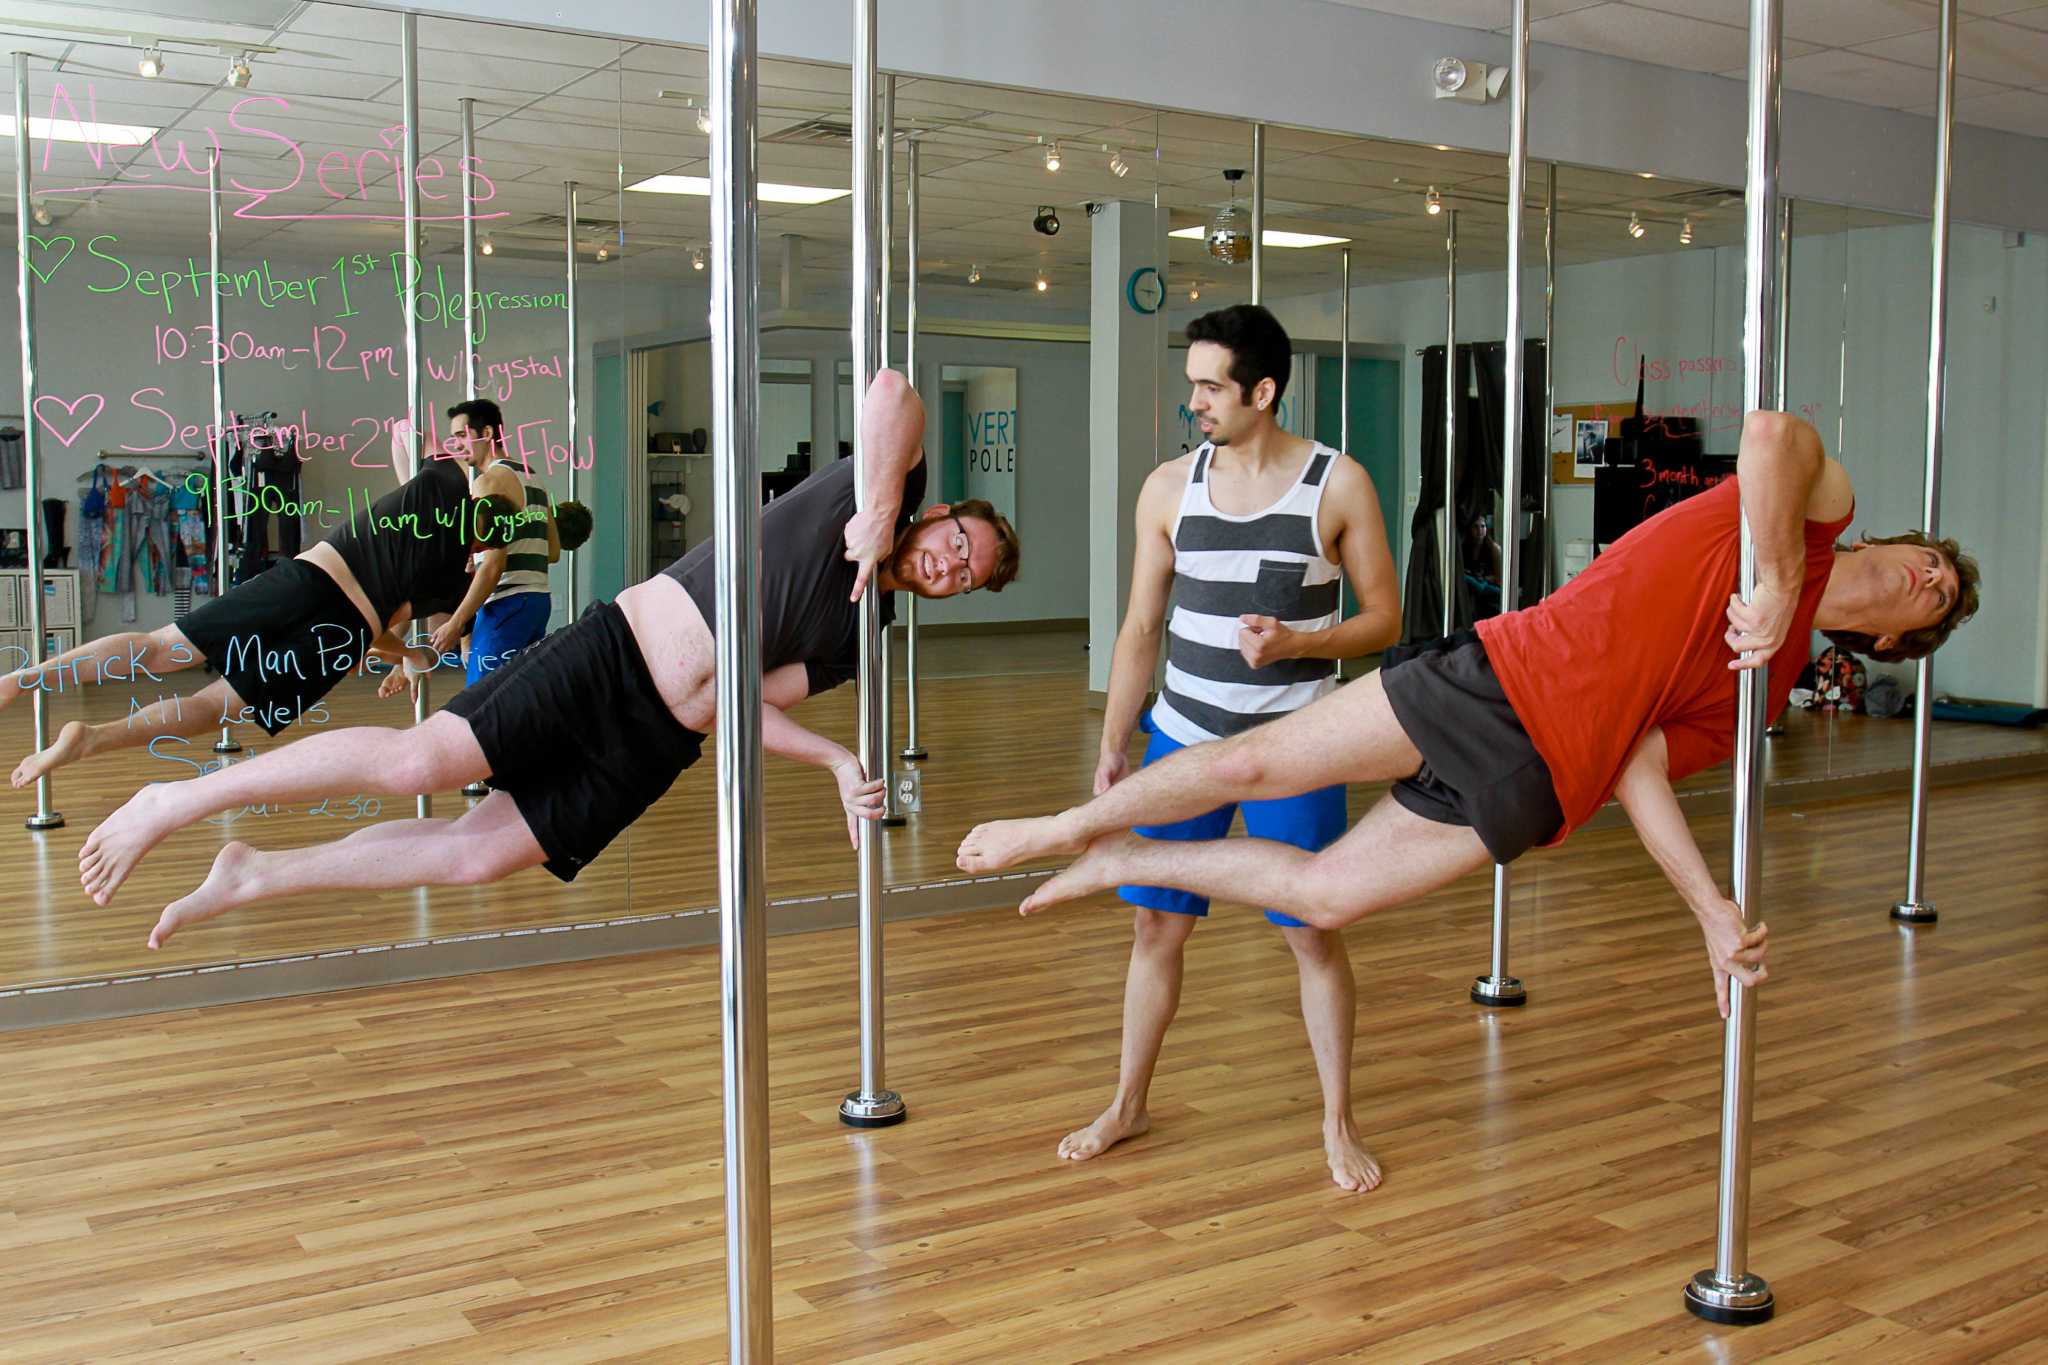 Men seeking workout challenge take pole-dancing class for a spin.